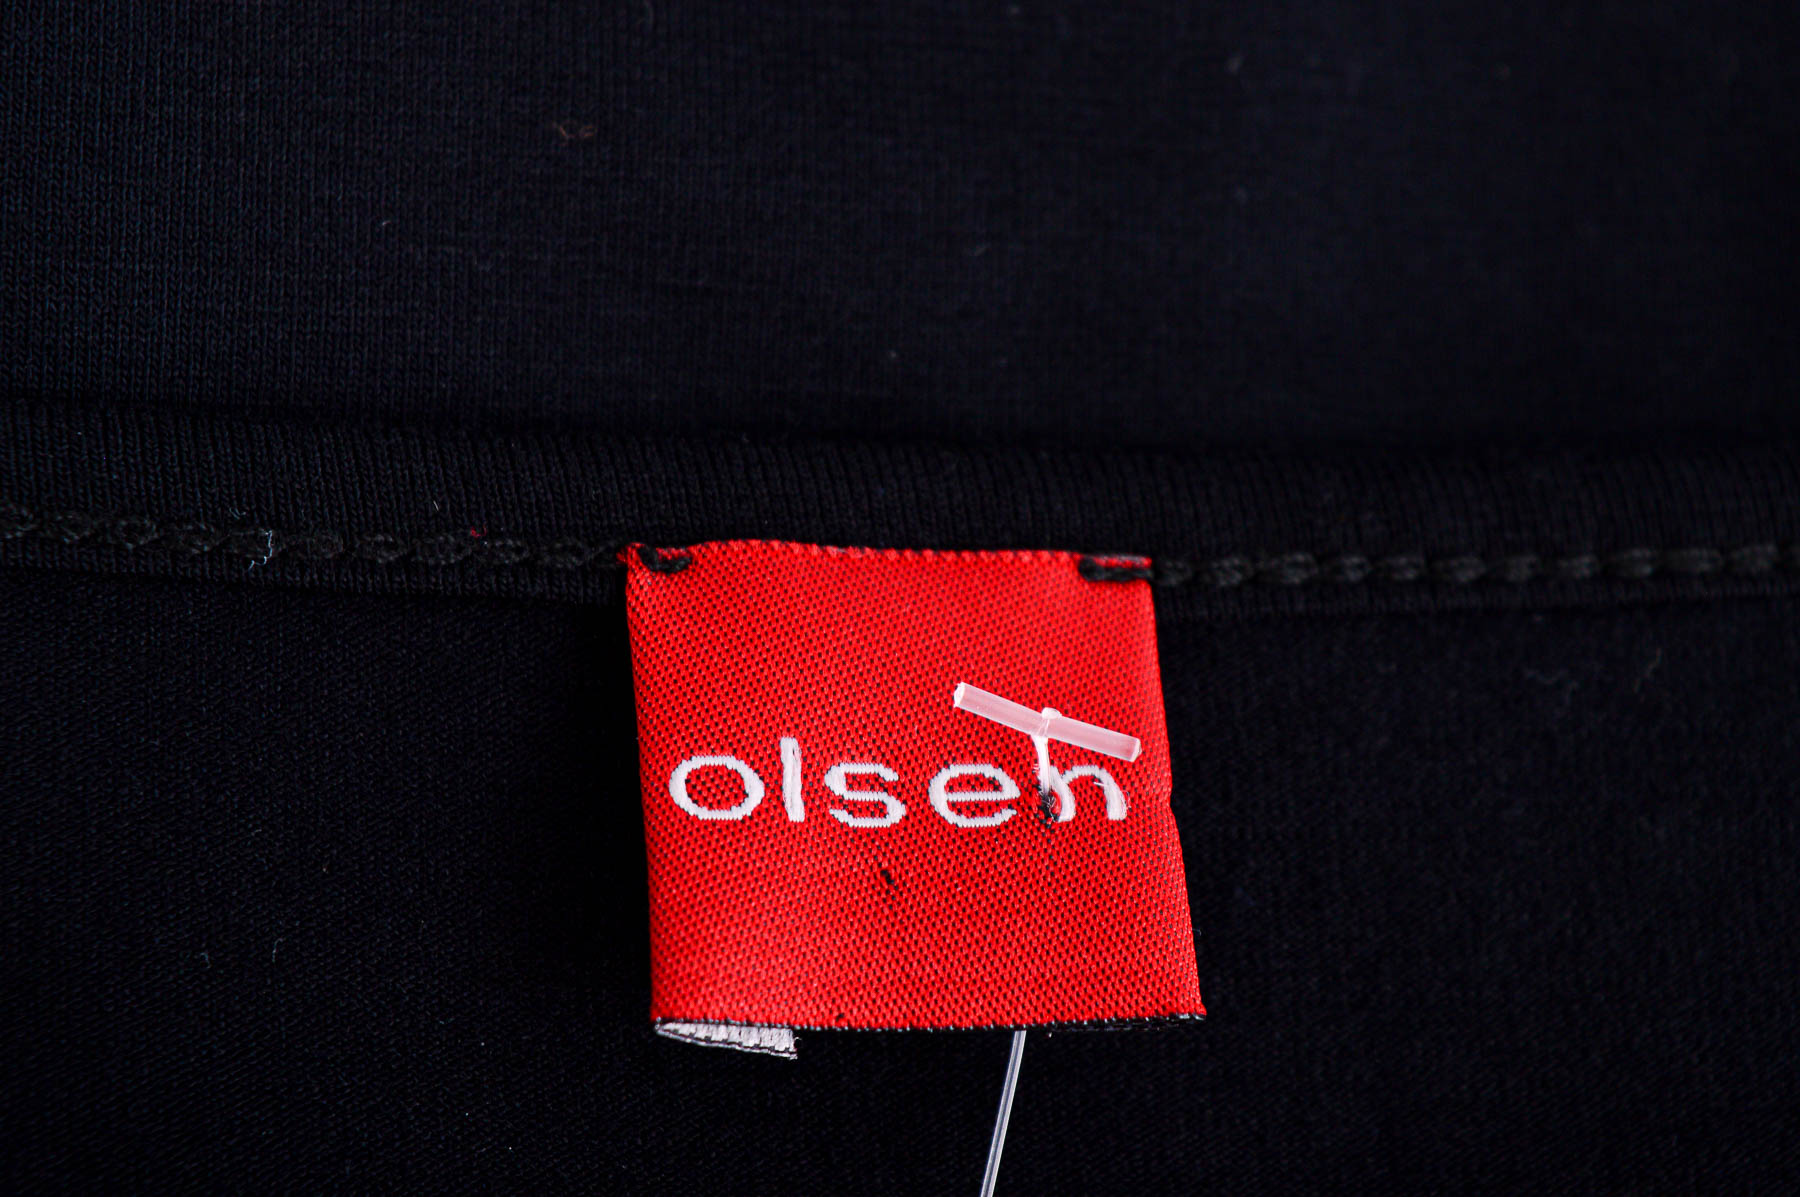 Bluzka damska - Olsen - 2